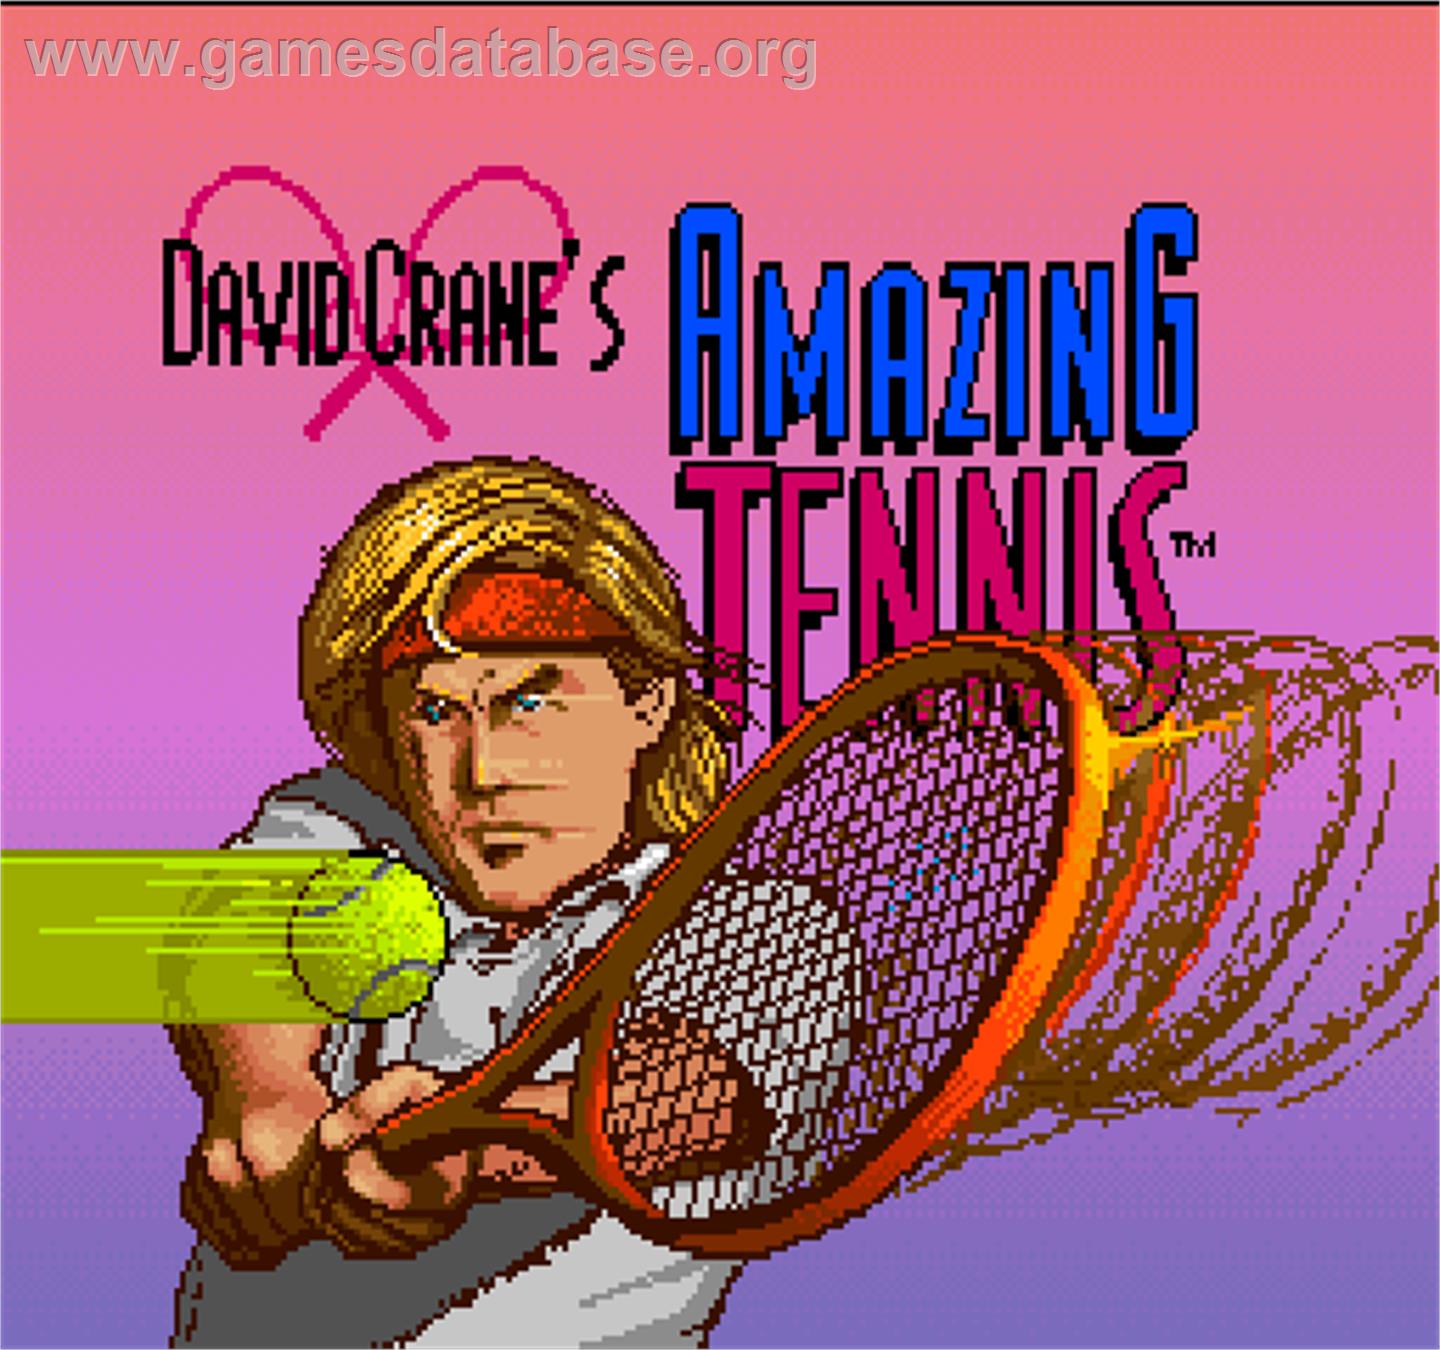 David Crane's Amazing Tennis - Arcade - Artwork - Title Screen